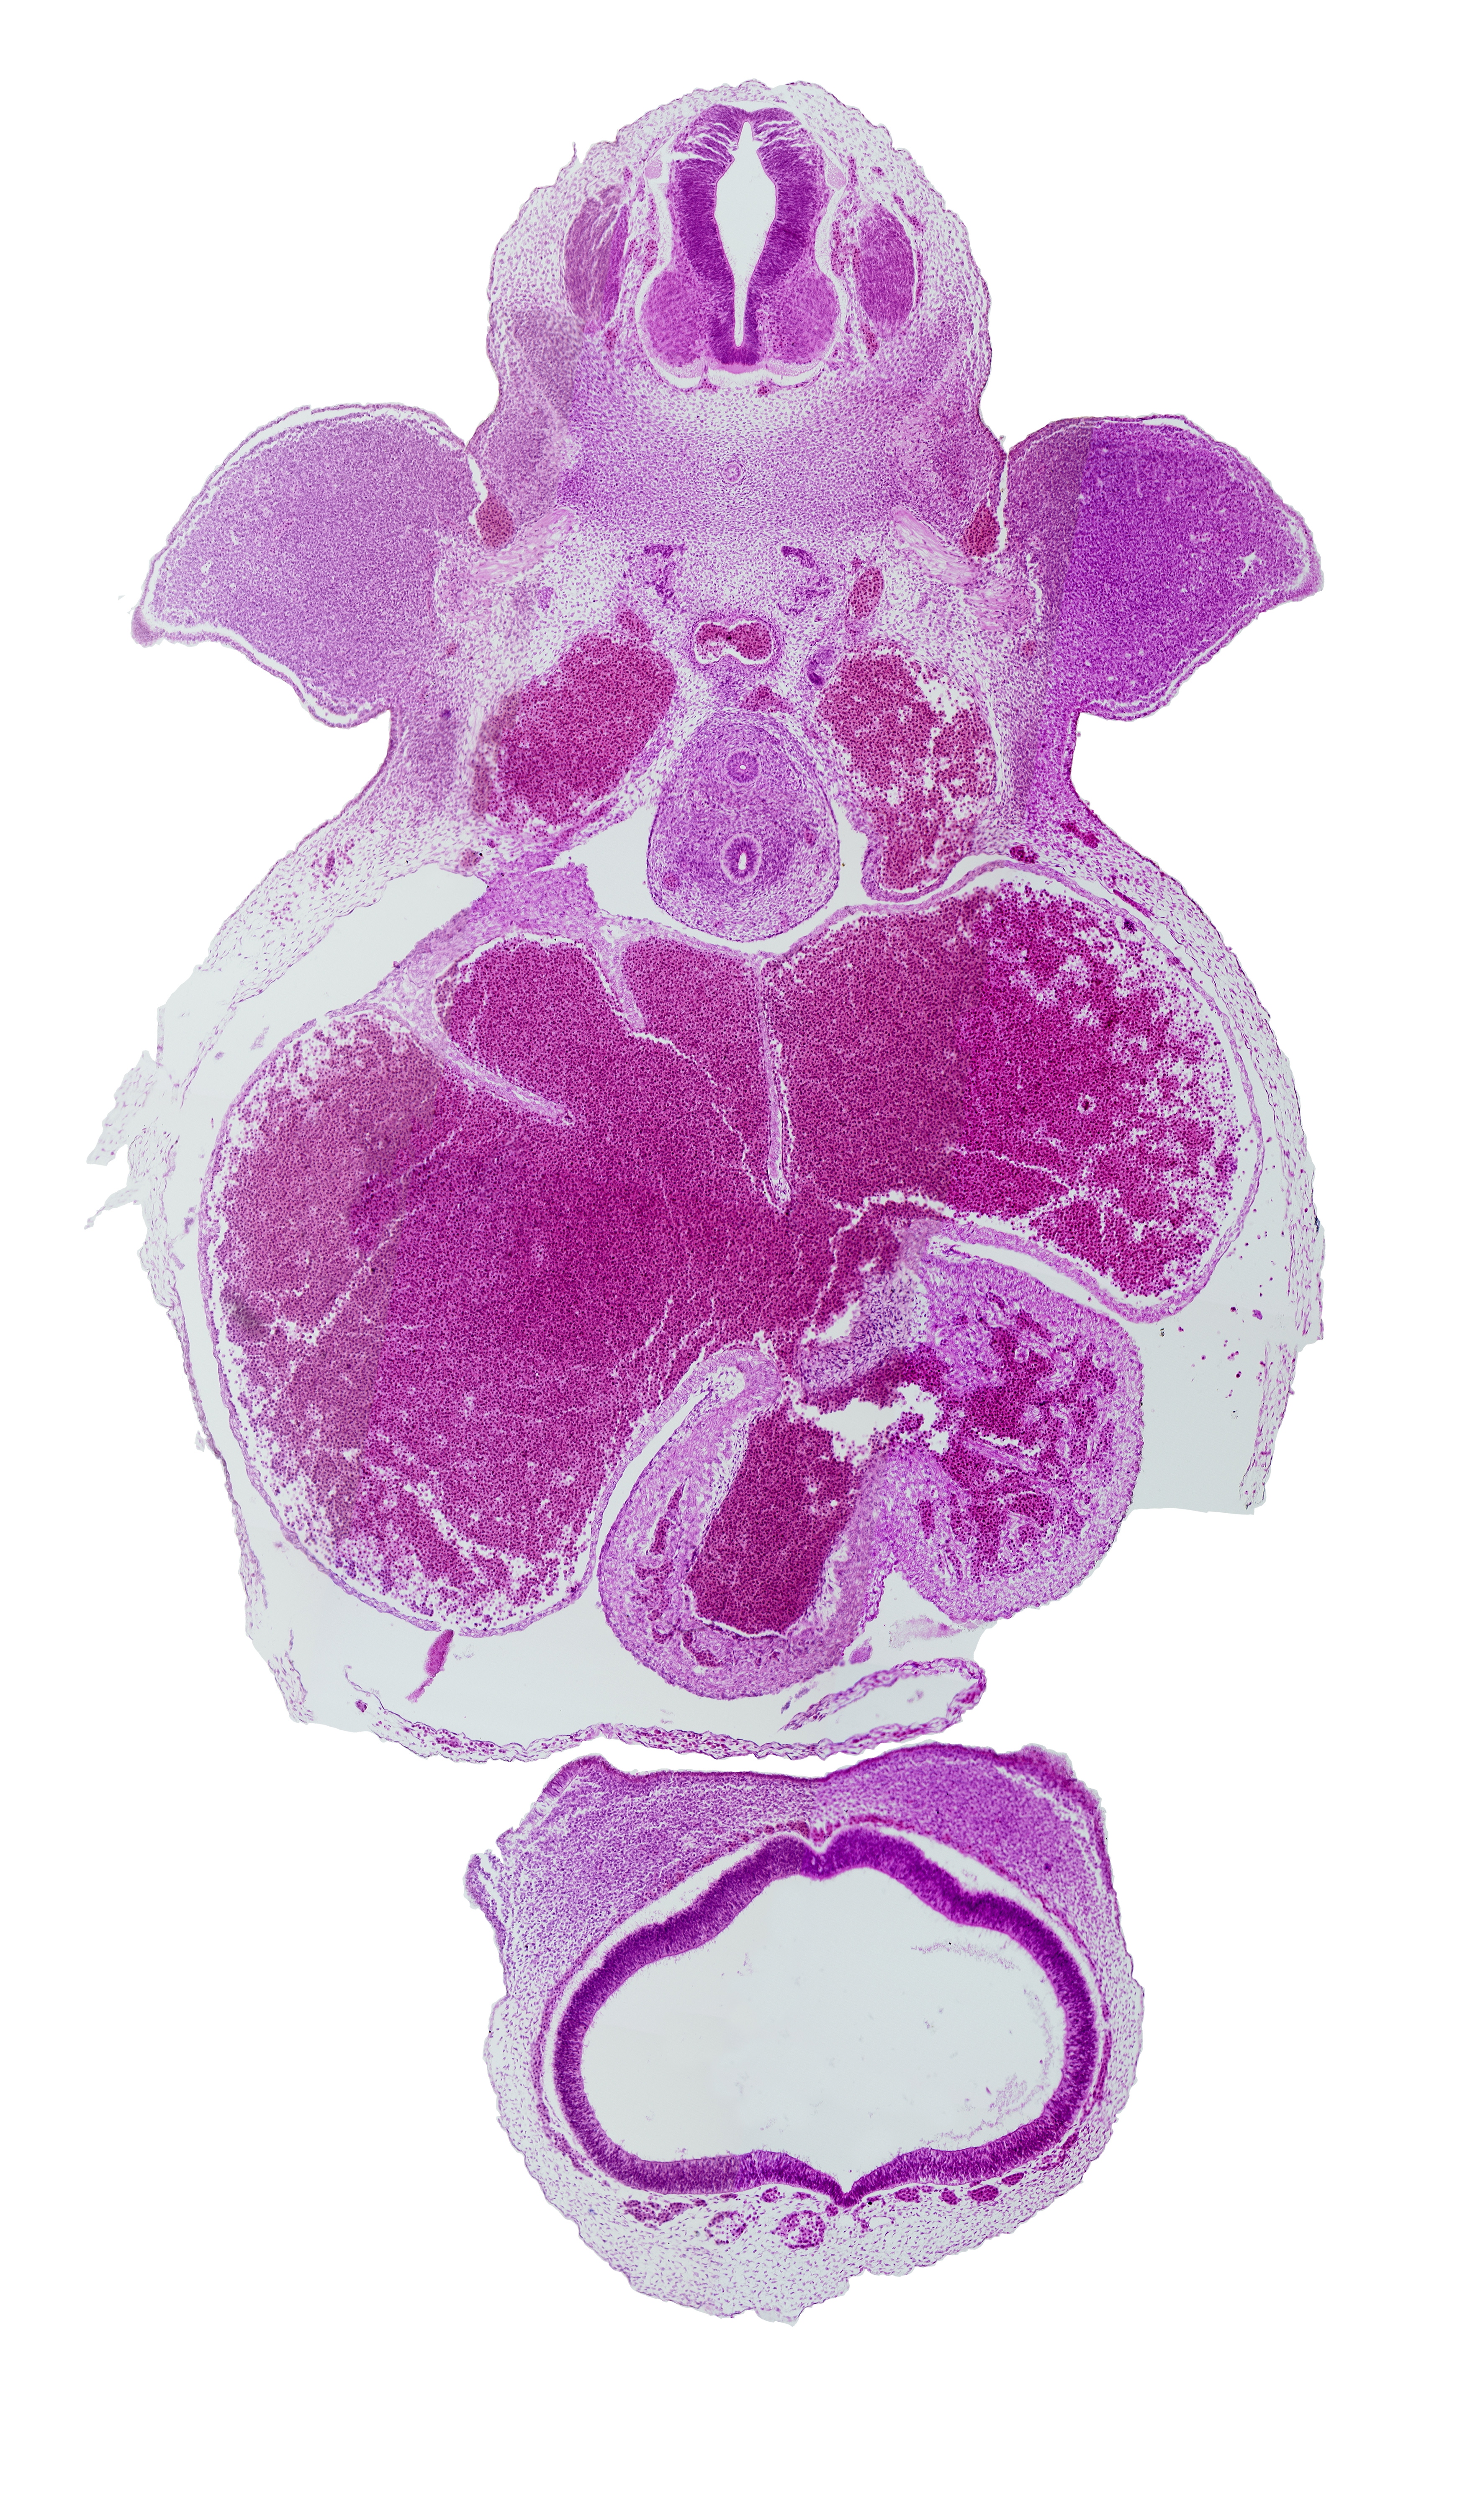 C-7 spinal ganglion, apical epidermal ridge, cephalic edge of nasal prominences, esophagus, hippocampus, junction of cardinal vein and common cardinal vein, junction of dorsal aortas, left venous valve, left ventricle, musculi pectinati, precardinal vein (internal jugular vein), primary interatrial foramen (foramen primum), primary interatrial septum (septum primum), right atrium, right venous valve, sinu-atrial foramen, sinus venosus, telencephalon medium, trachea